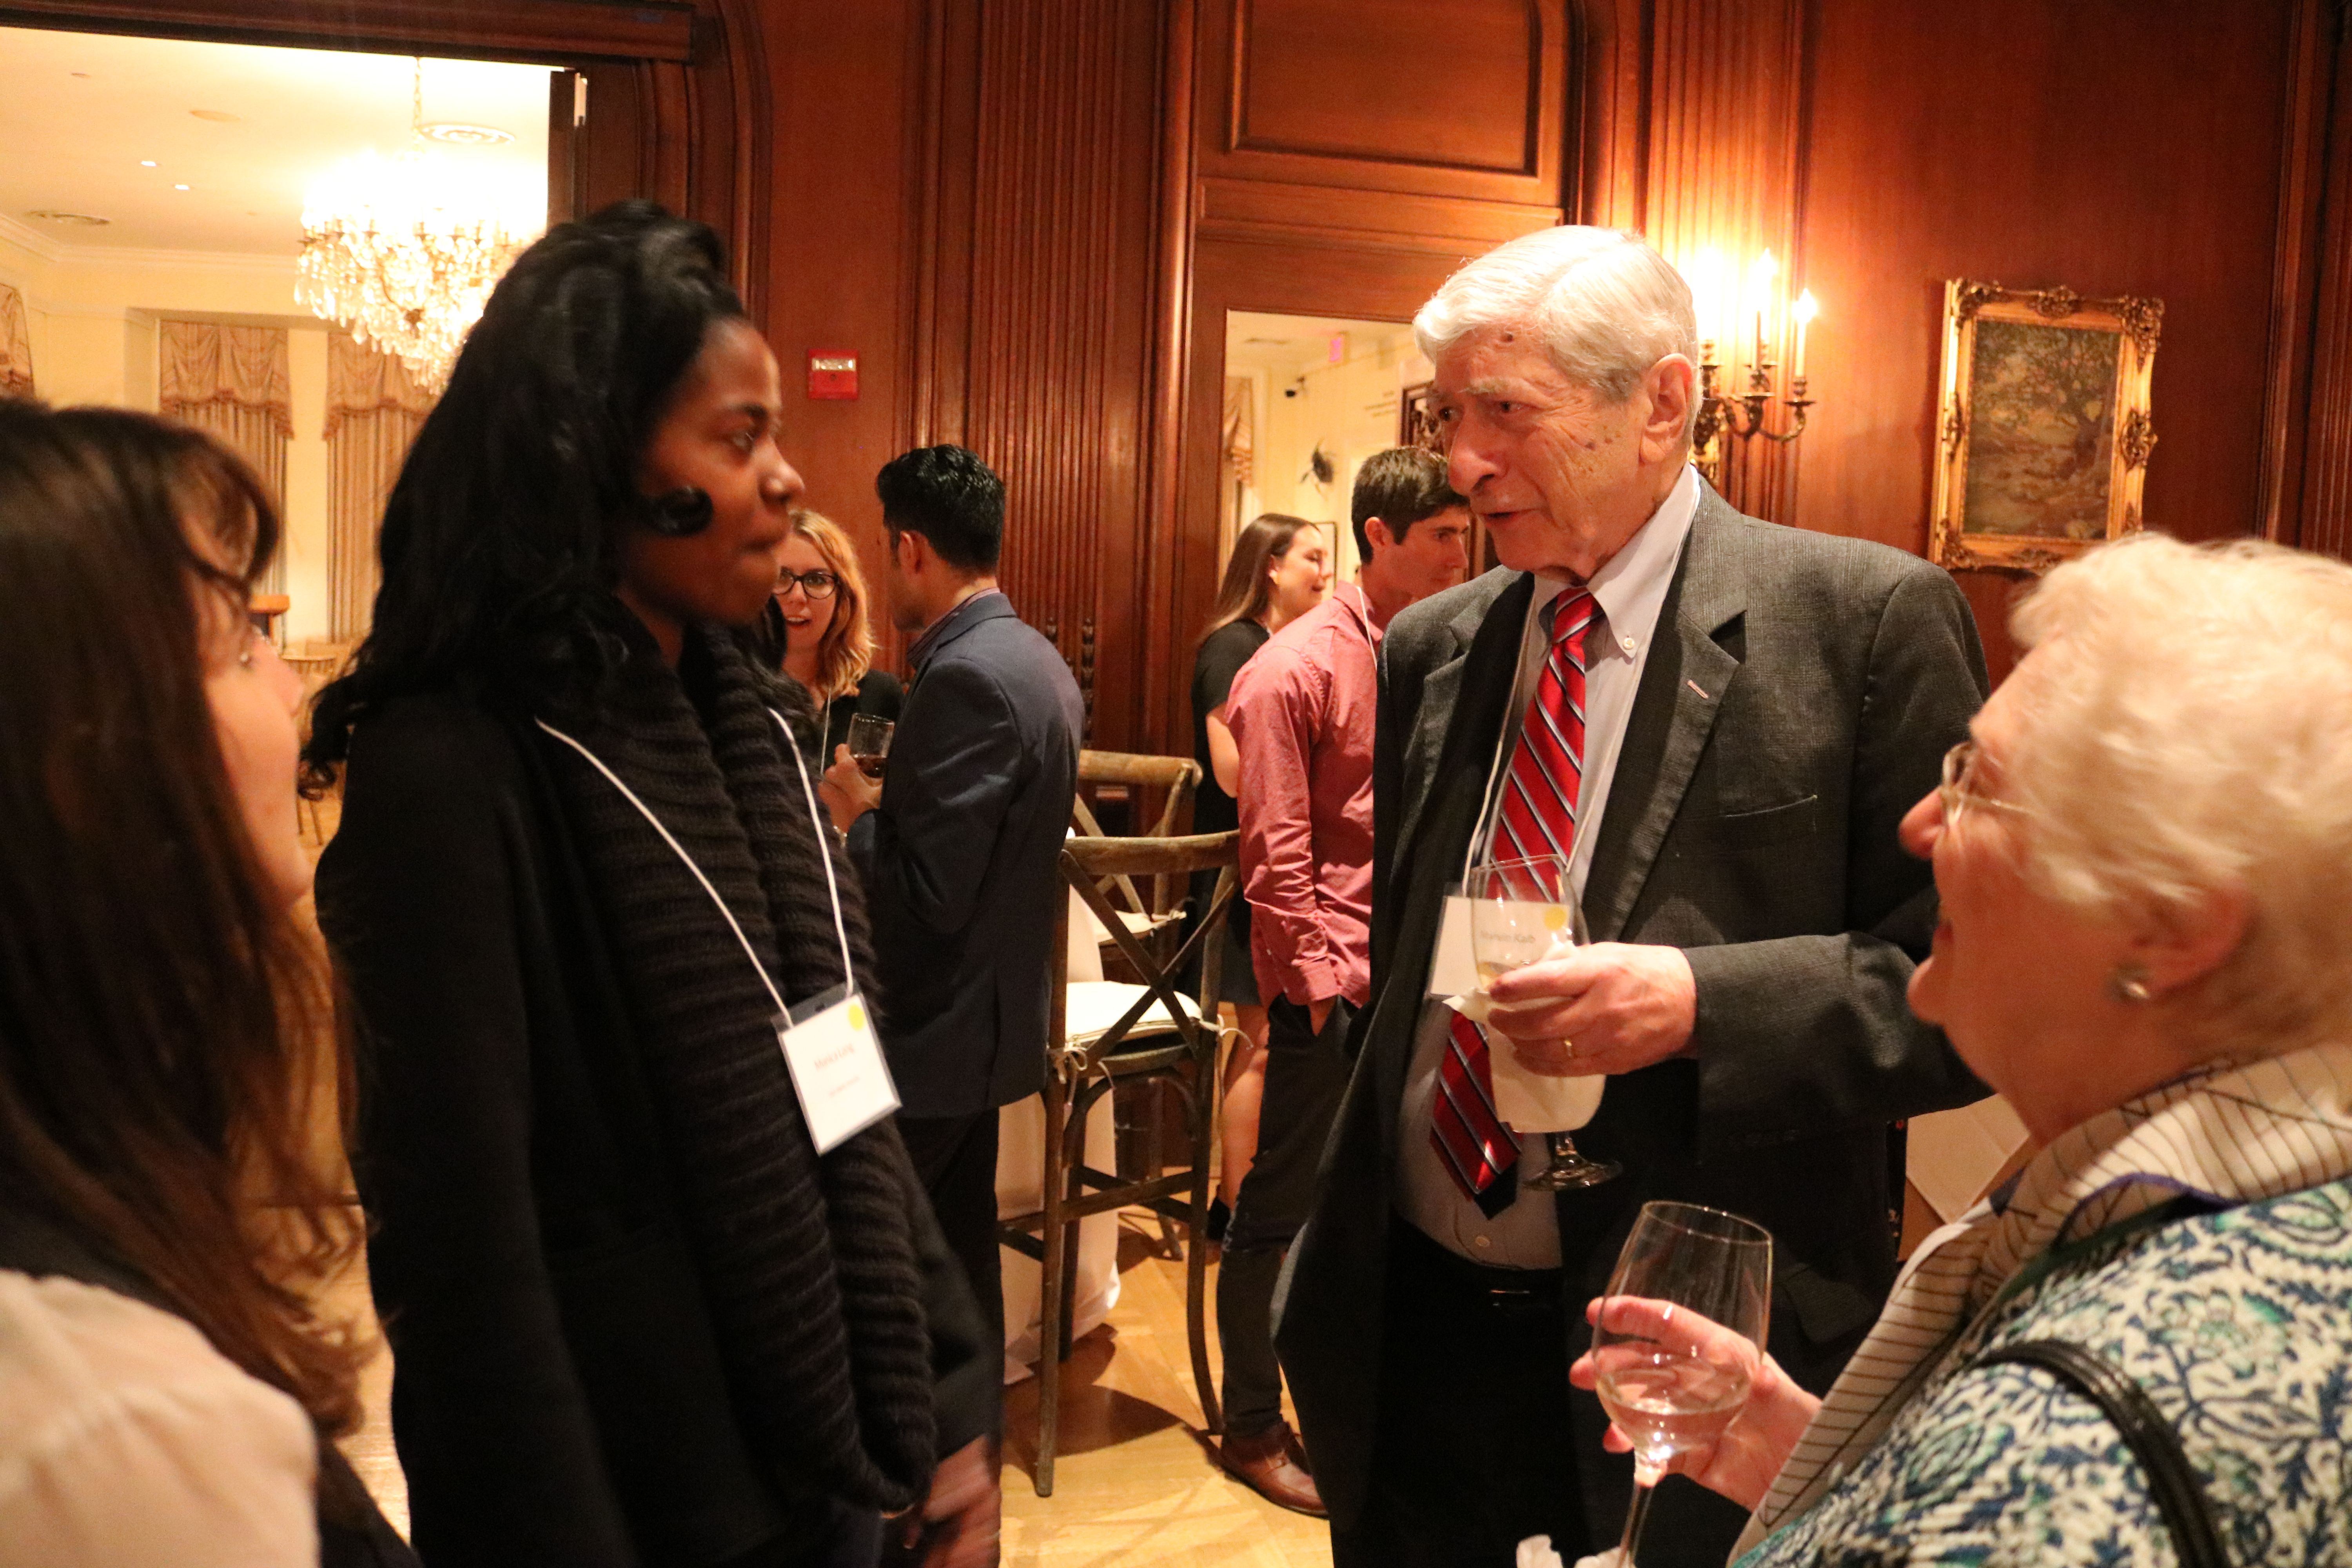 Student fellows Amanda Gordon and Monica Long speak with Pulitzer Center Senior Adviser Marvin Kalb and Mady Kalb. Image by Karena Phan. United States, 2018.